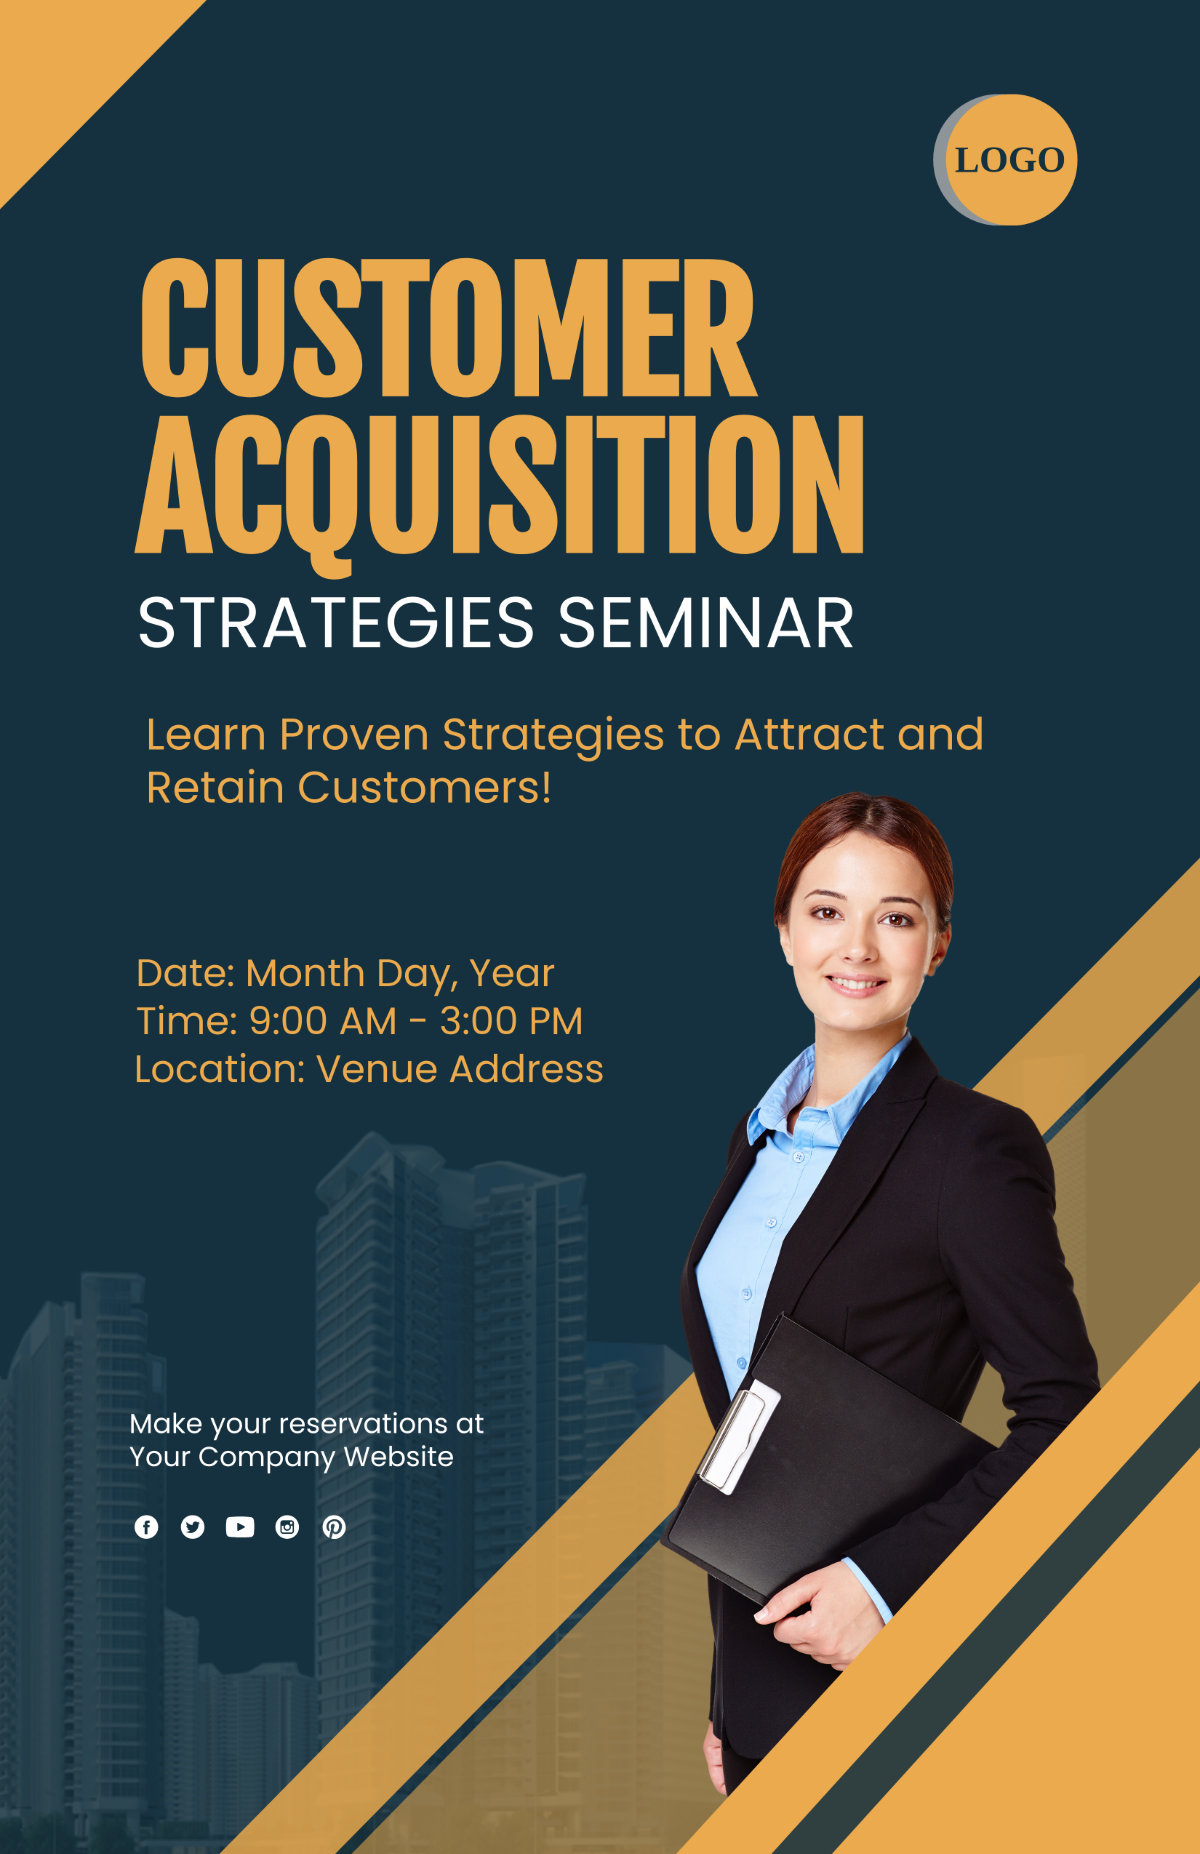 Customer Acquisition Strategies Seminar Poster Template